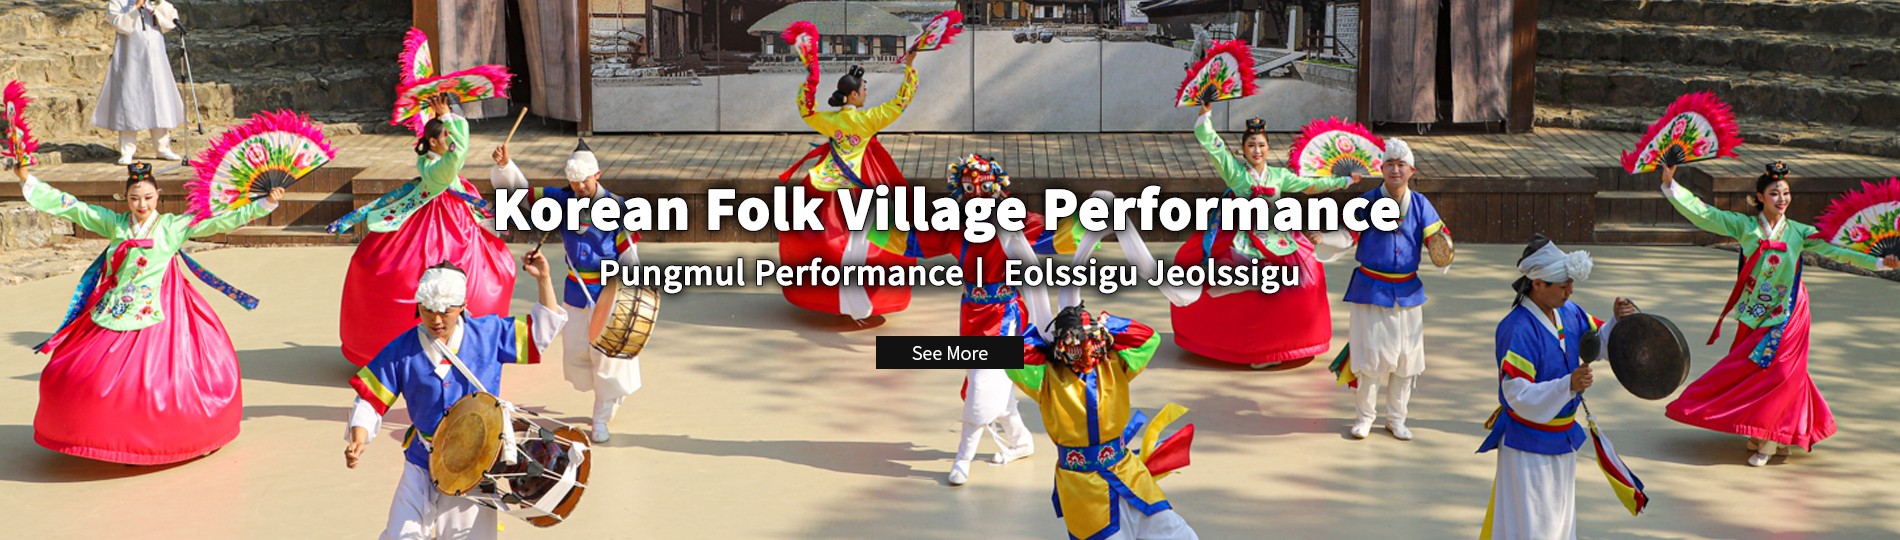 Korean Folk Village Performance